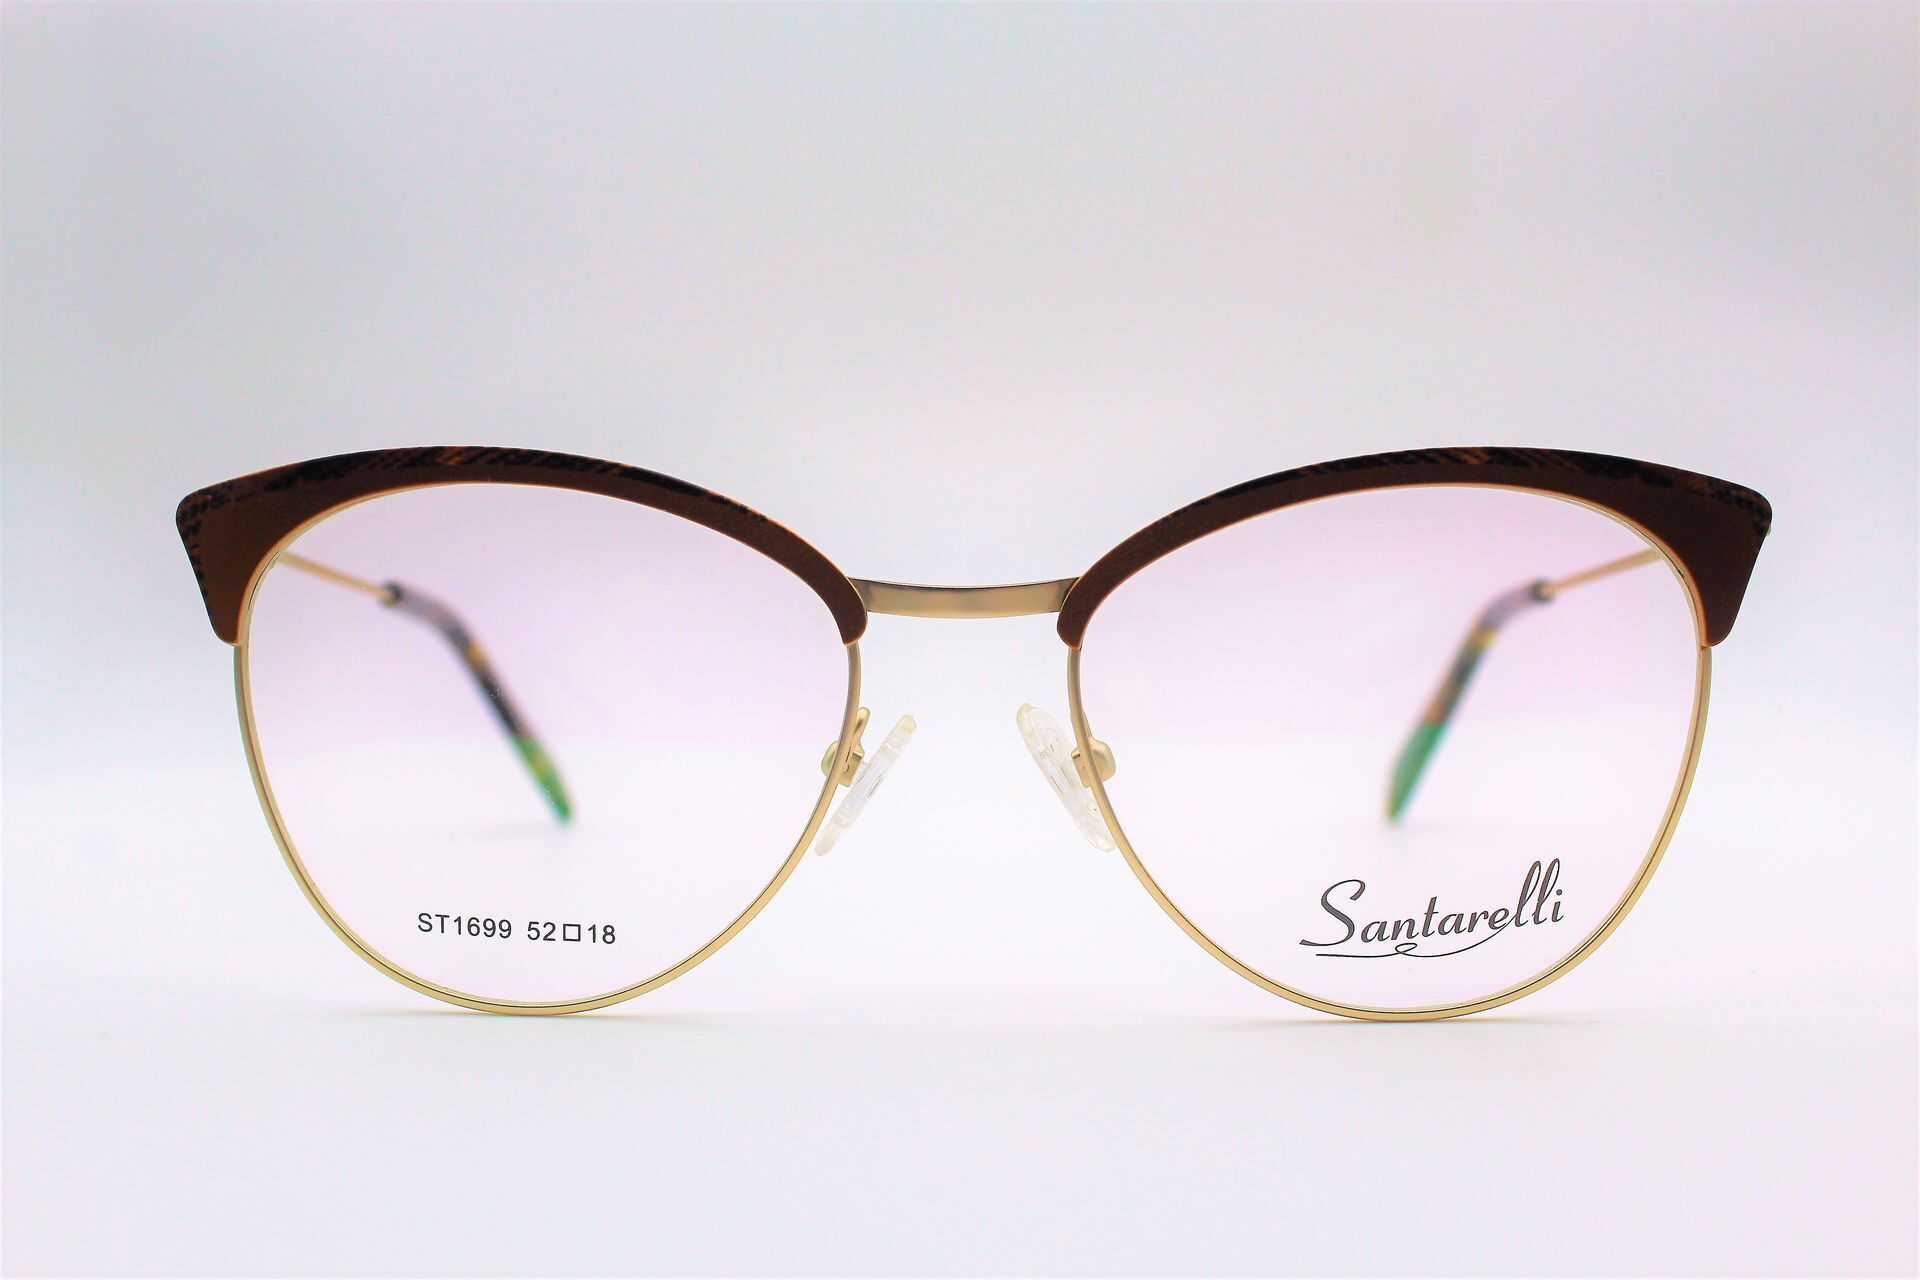 C1886 c 3072 ru. Santarelli 2181-6 очки. 1967 C2 Santarelli очки. Оправа Santarelli St 1766. Santarelli очки солнцезащитные 9248.